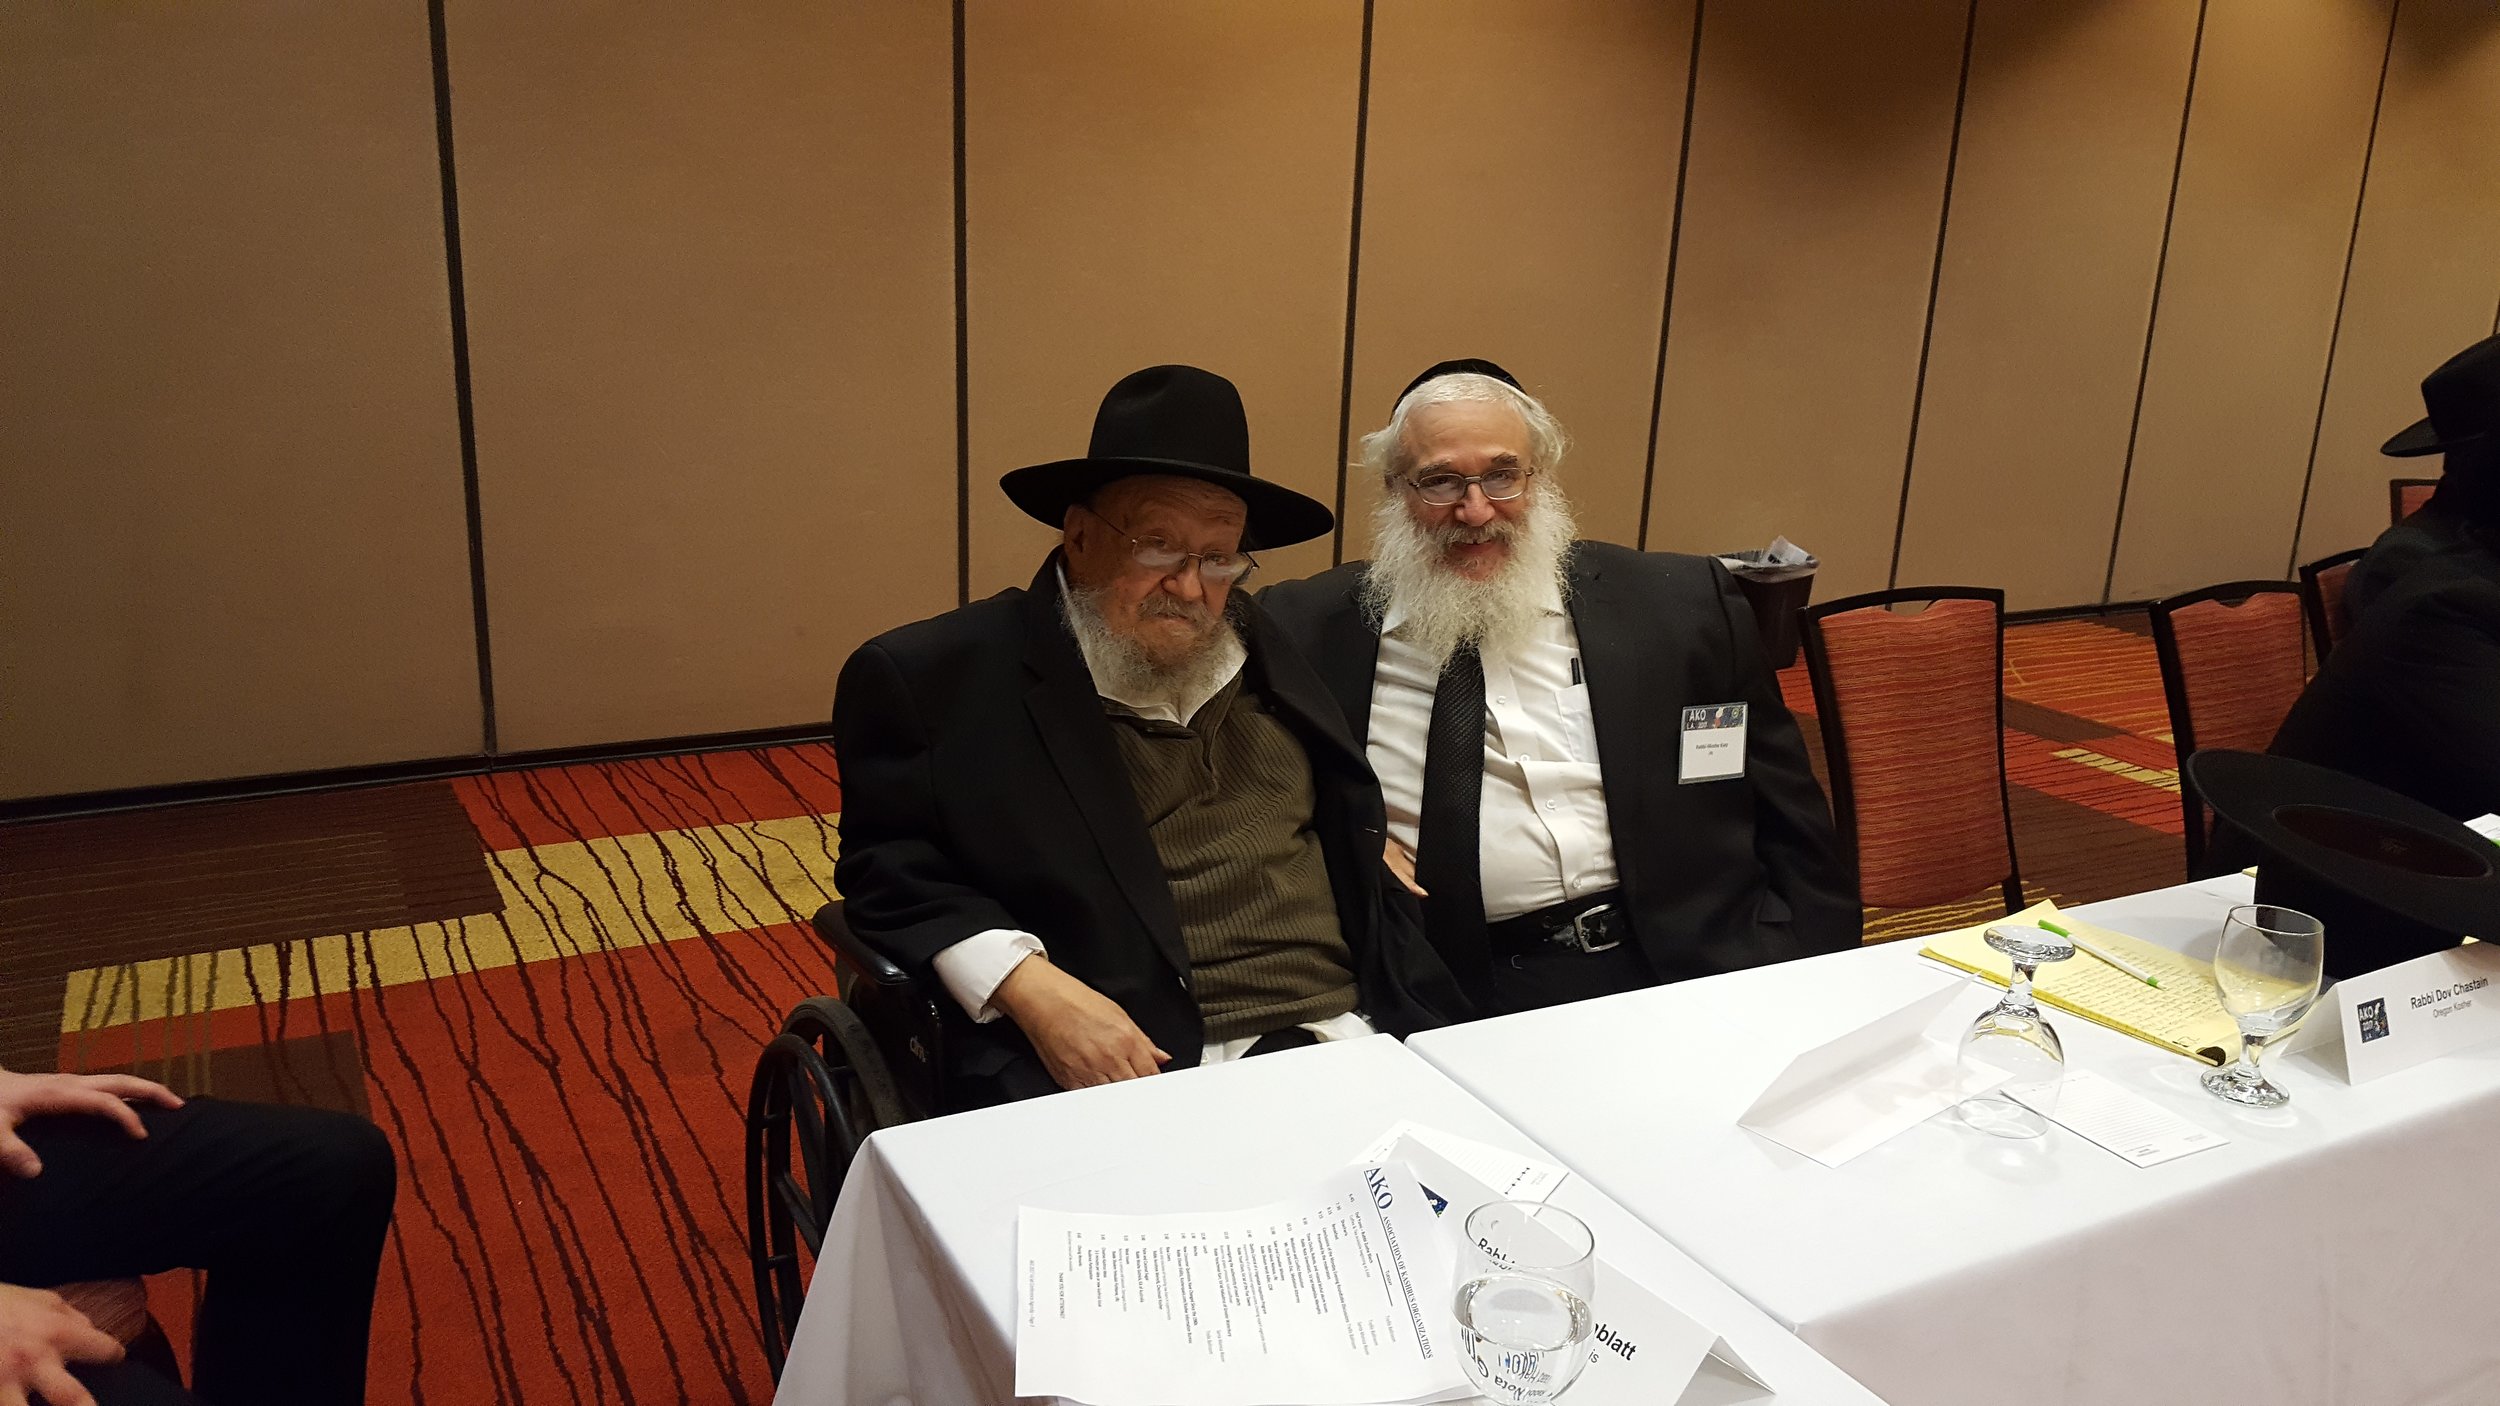 Reb Chaim Goldzweig and Rabbi Moshe Katz at the AKO Convention Oxnard CA February 2017.jpg